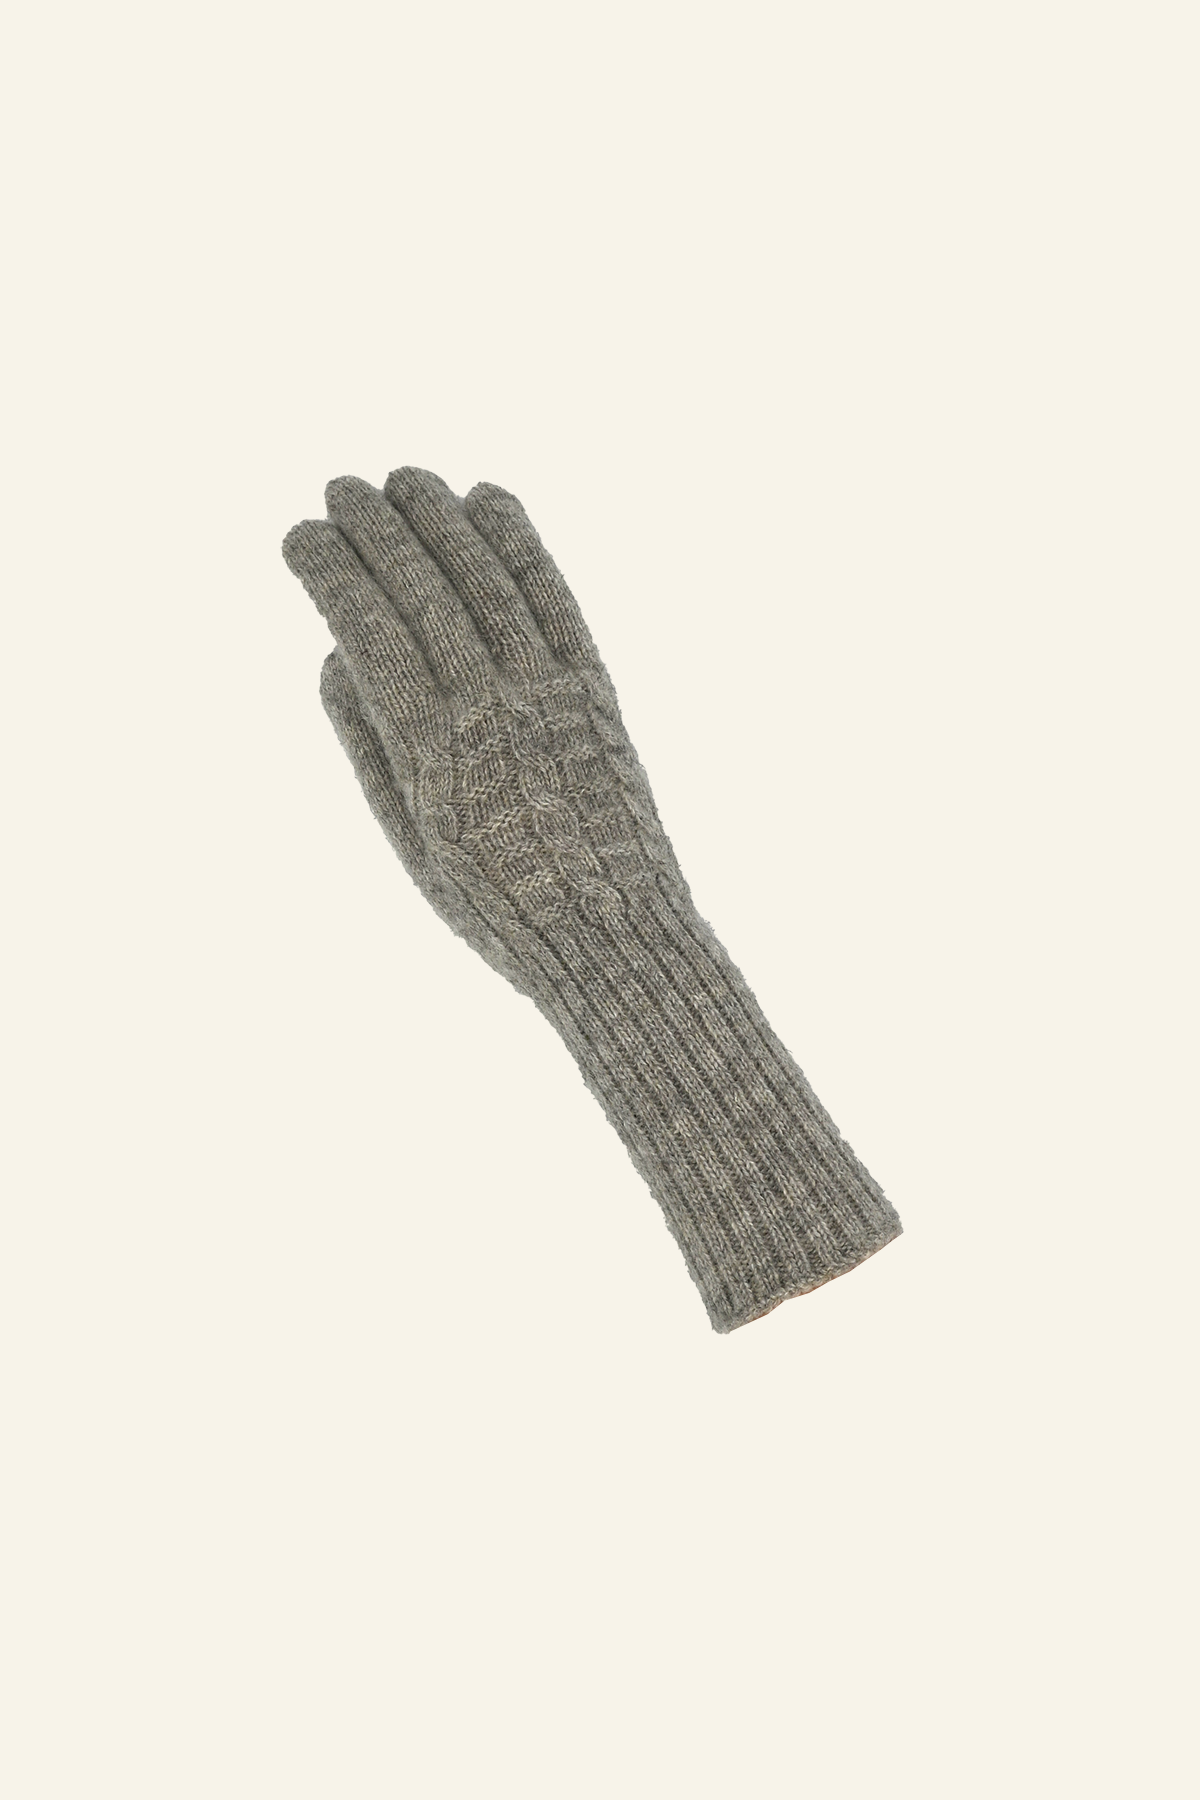 Half Sleeve Light Grey Yak Down Pattern Knit Gloves